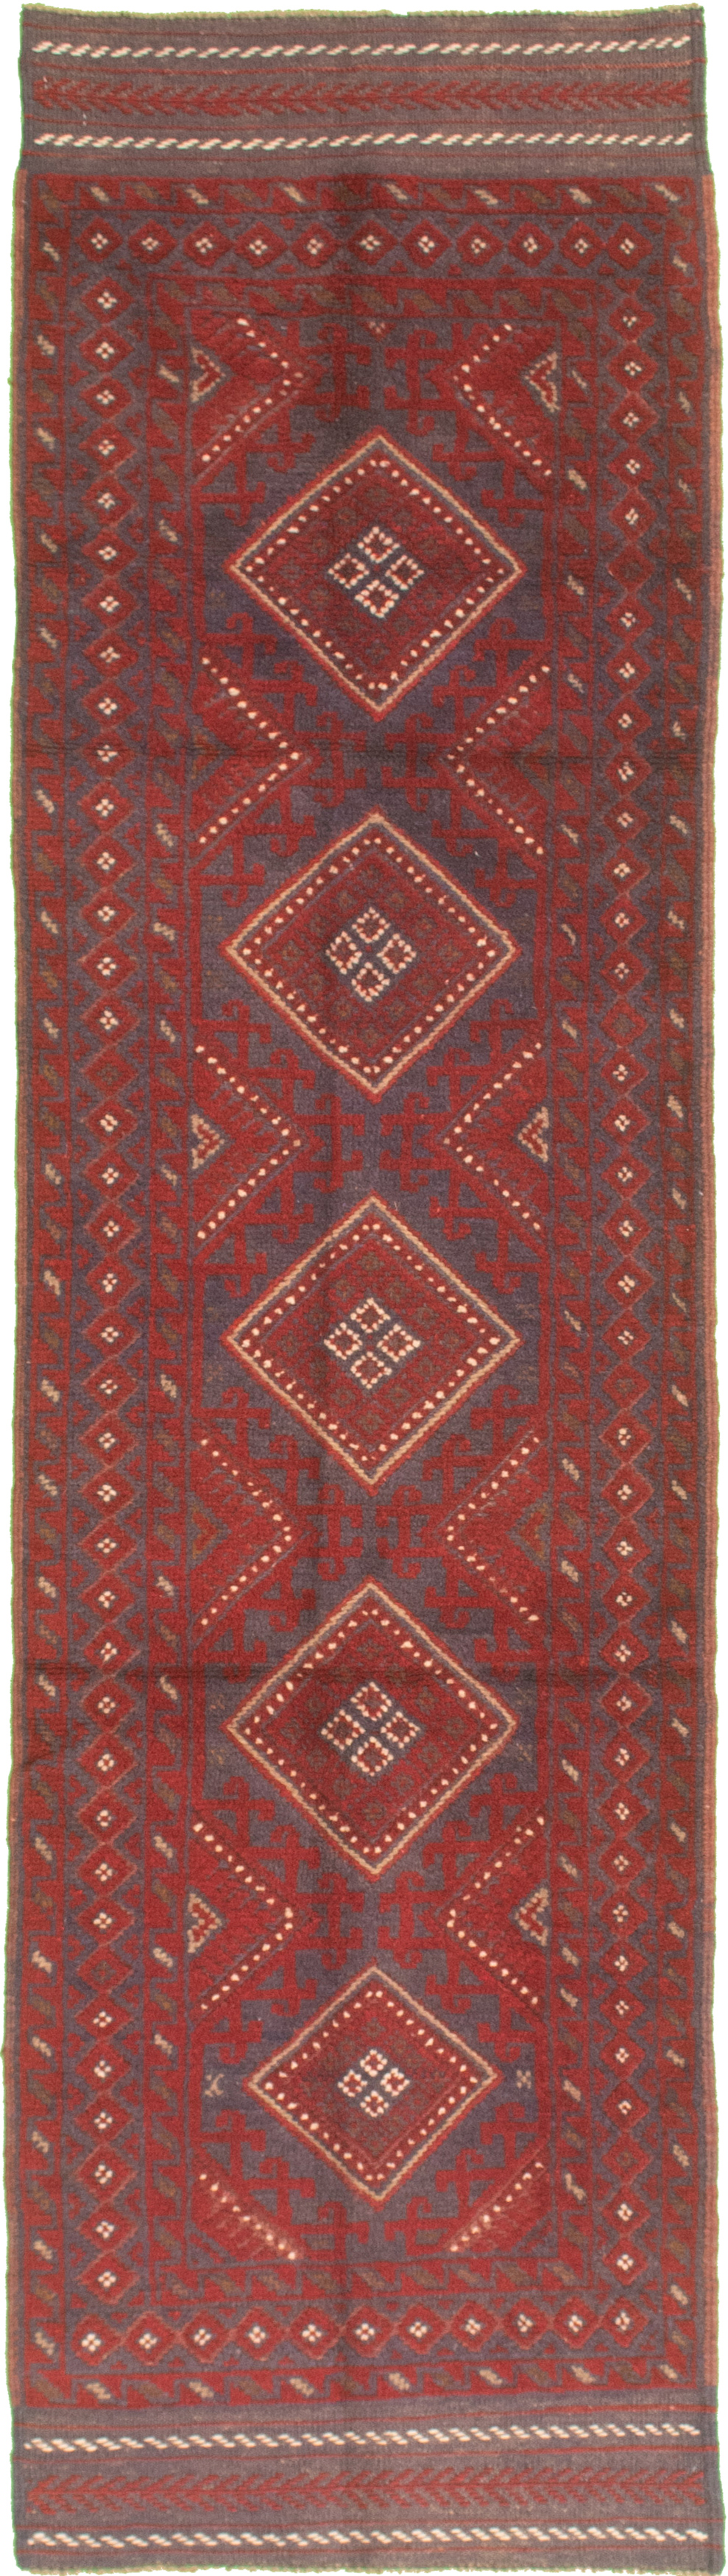 Hand-knotted Tajik Caucasian Red Wool Rug 2'2" x 8'11"  Size: 2'2" x 8'11"  